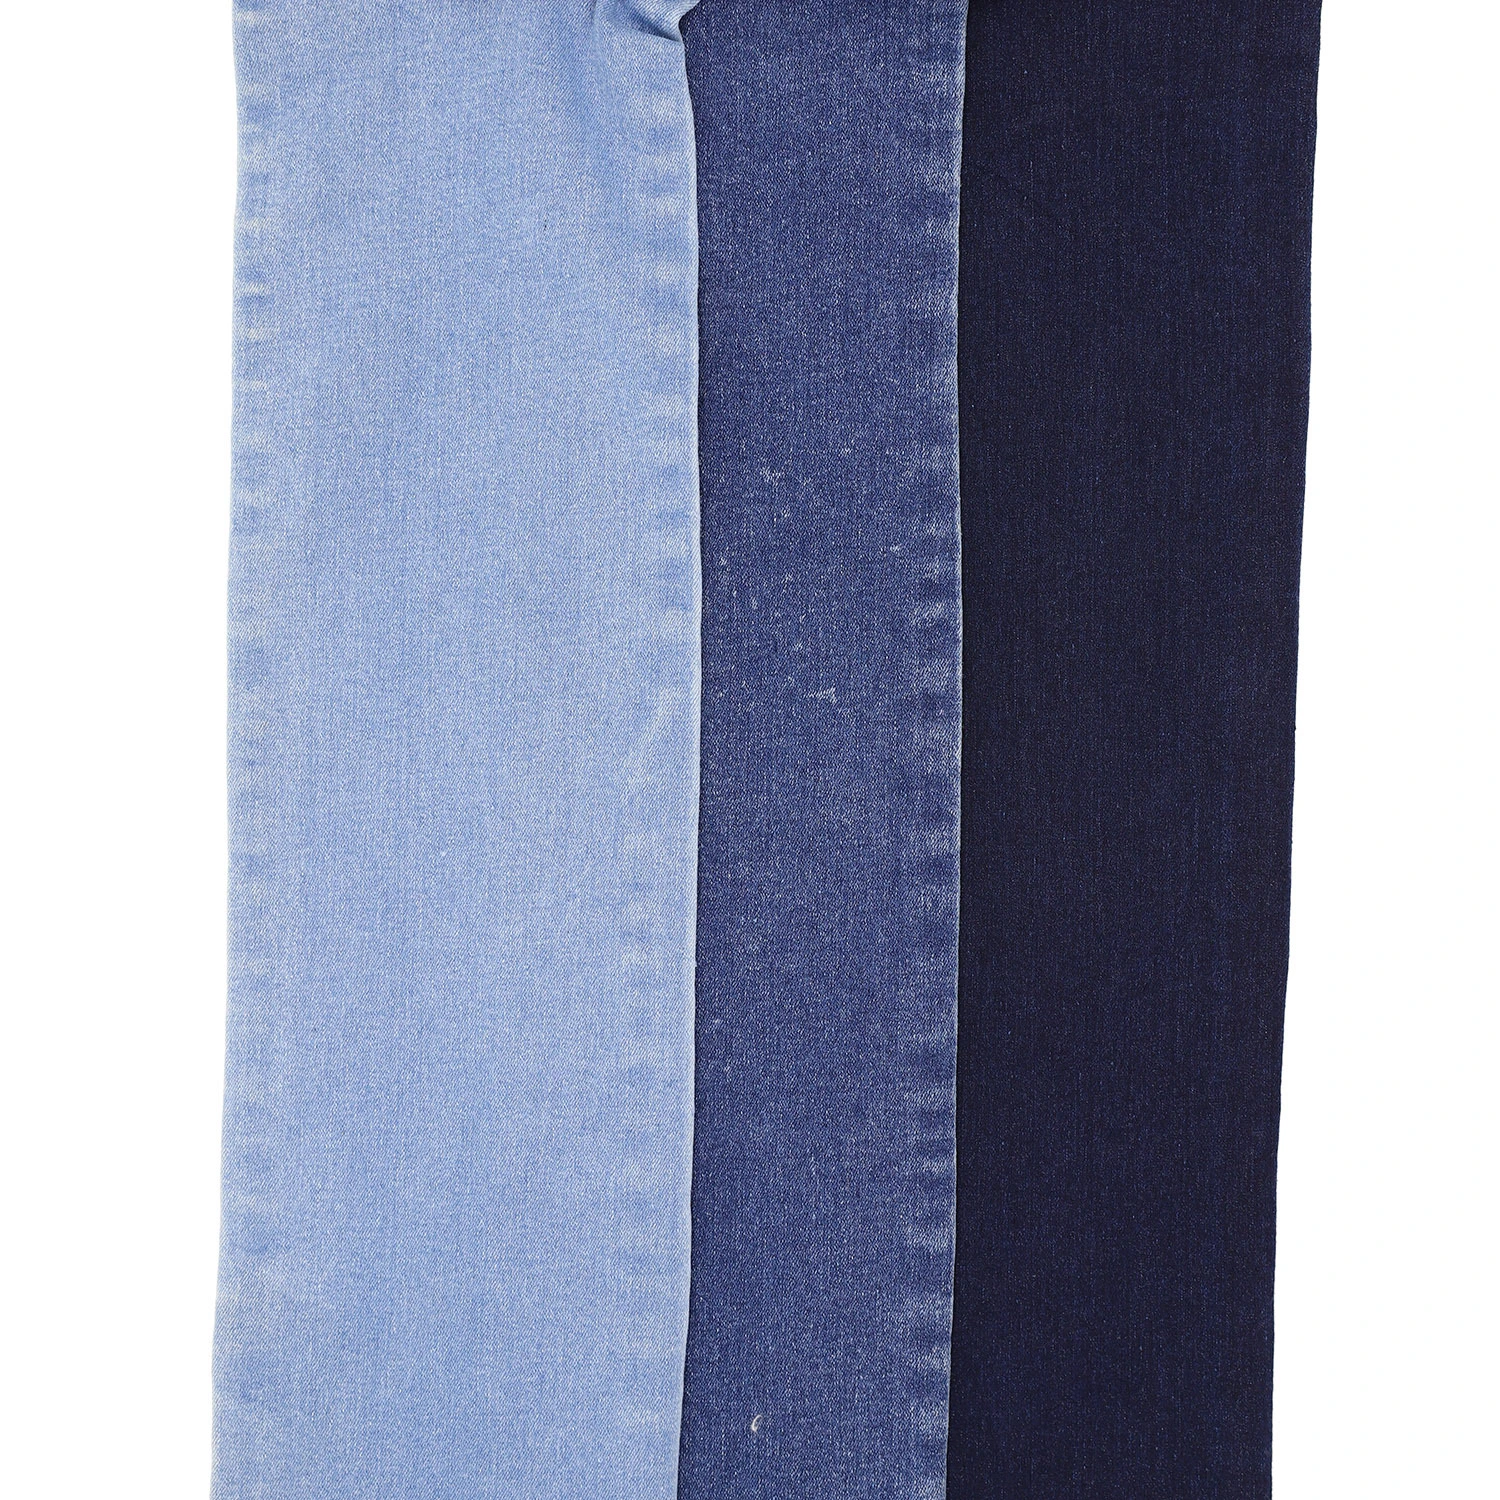 205A-7 10*16/70 65.5%Cotton 10oz High Quality Warp Slub Denim Fabric Wholesale 2